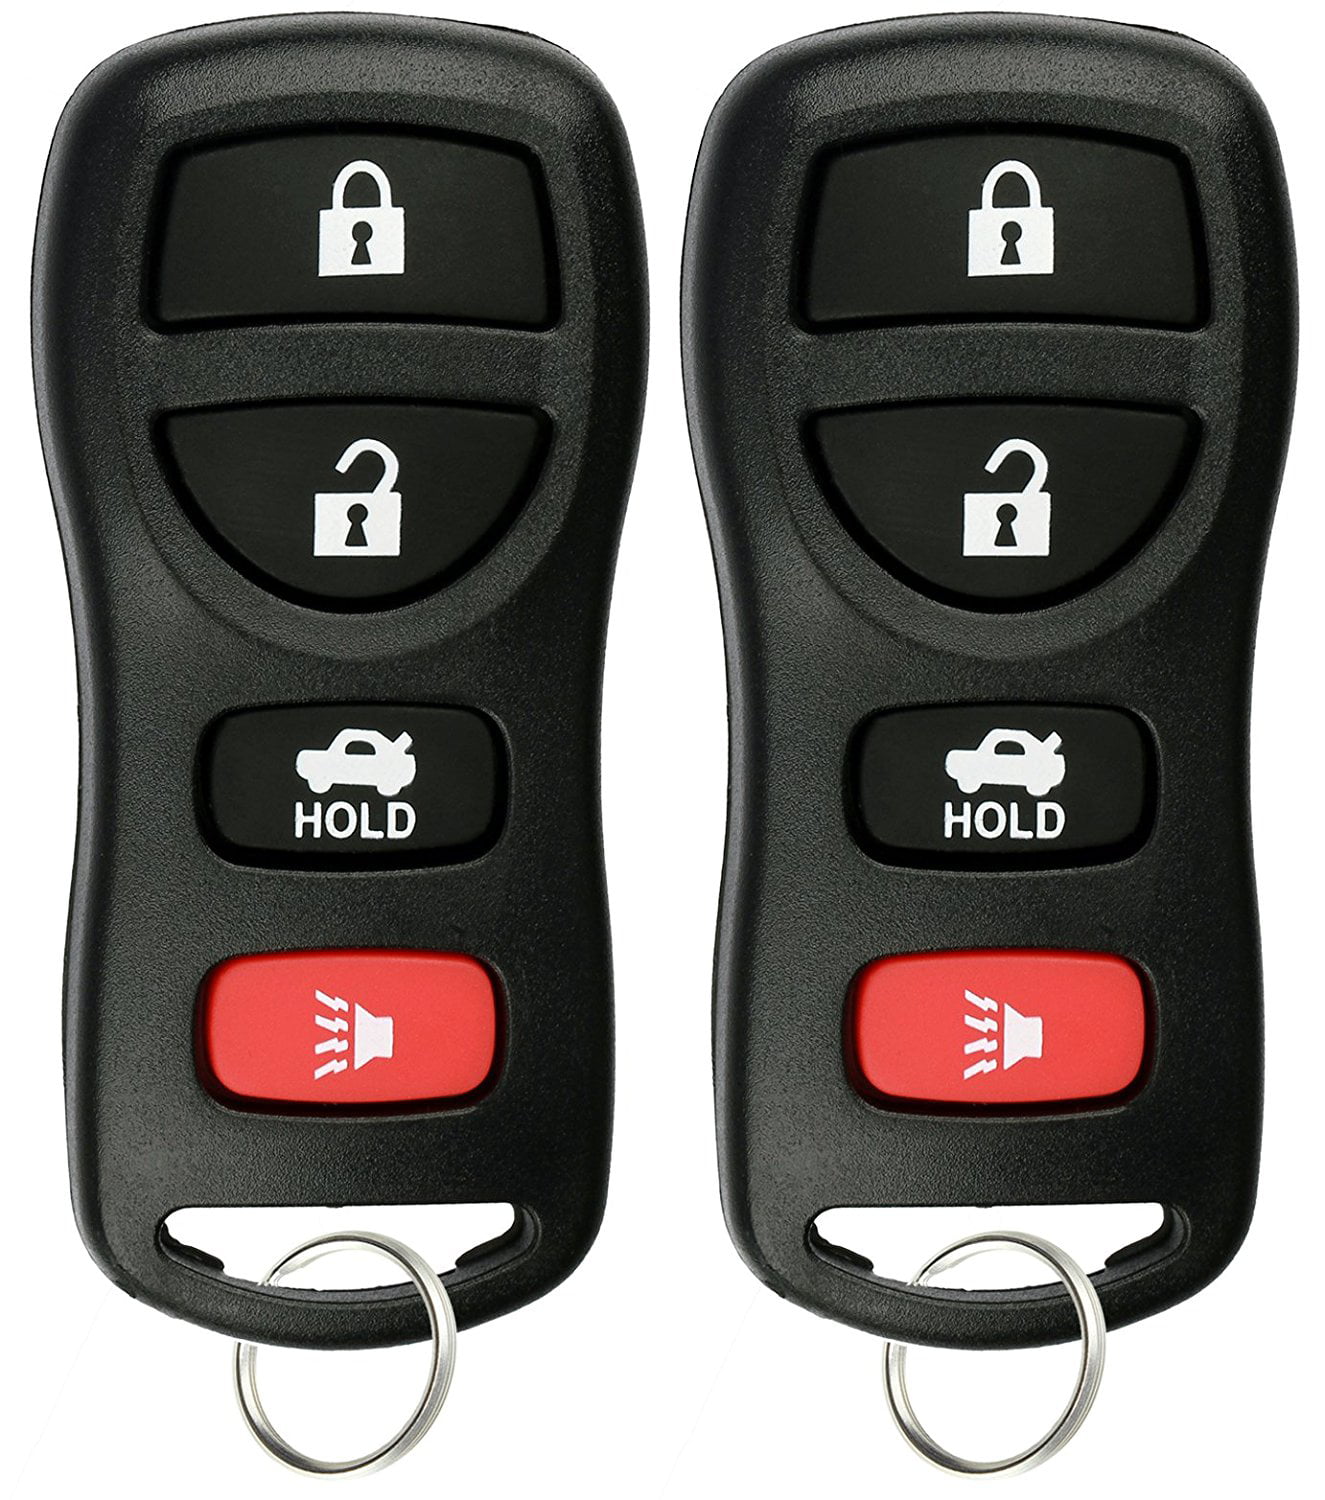 2 Remote Car Keyless Entry Key Fob For 2002 2003 2004 2005 2006 Nissan Altima 